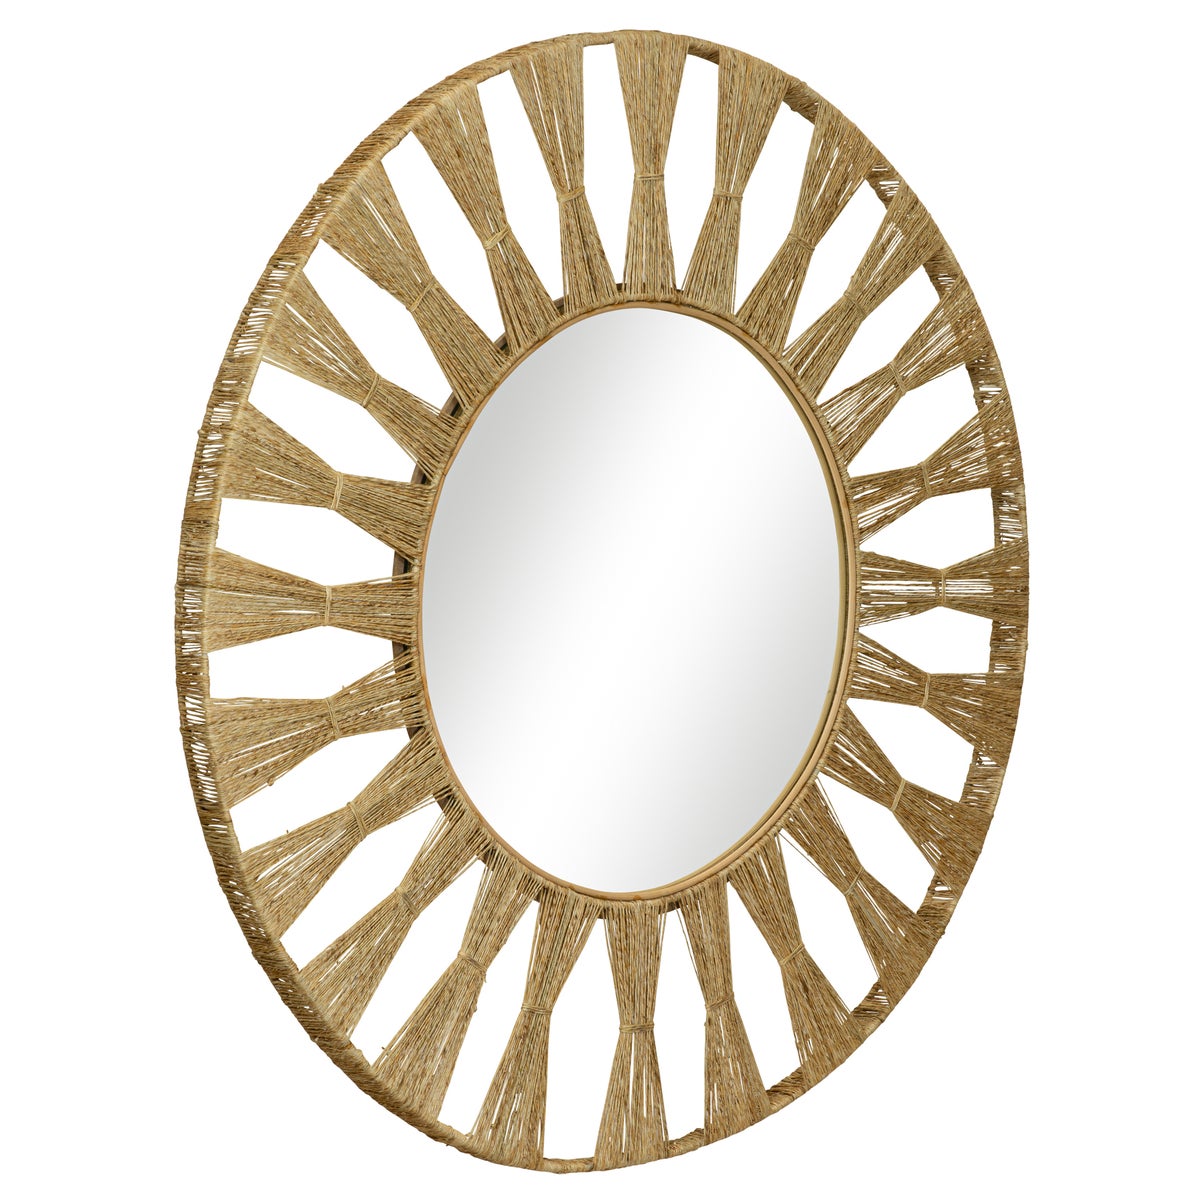 Ojai Round Mirror in Natural